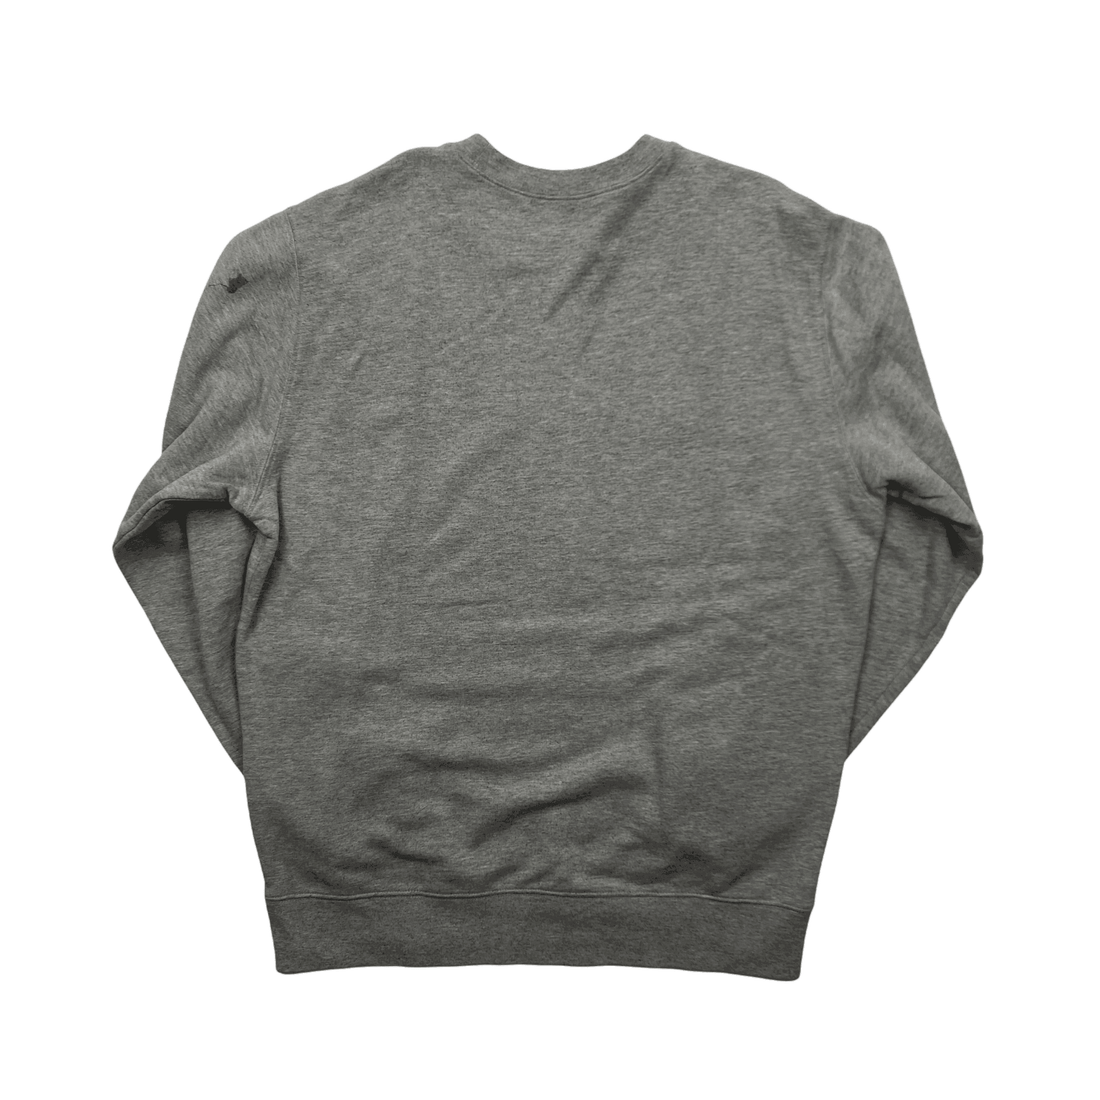 Vintage Grey Carhartt Spell-Out Sweatshirt - Large - The Streetwear Studio